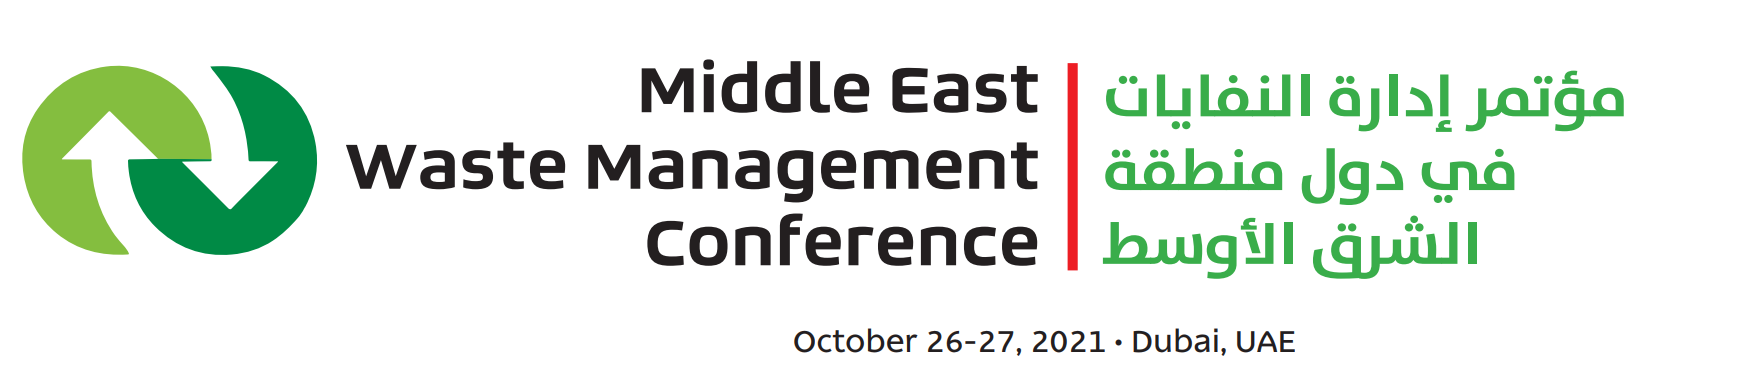 Middle East Waste Management Conference